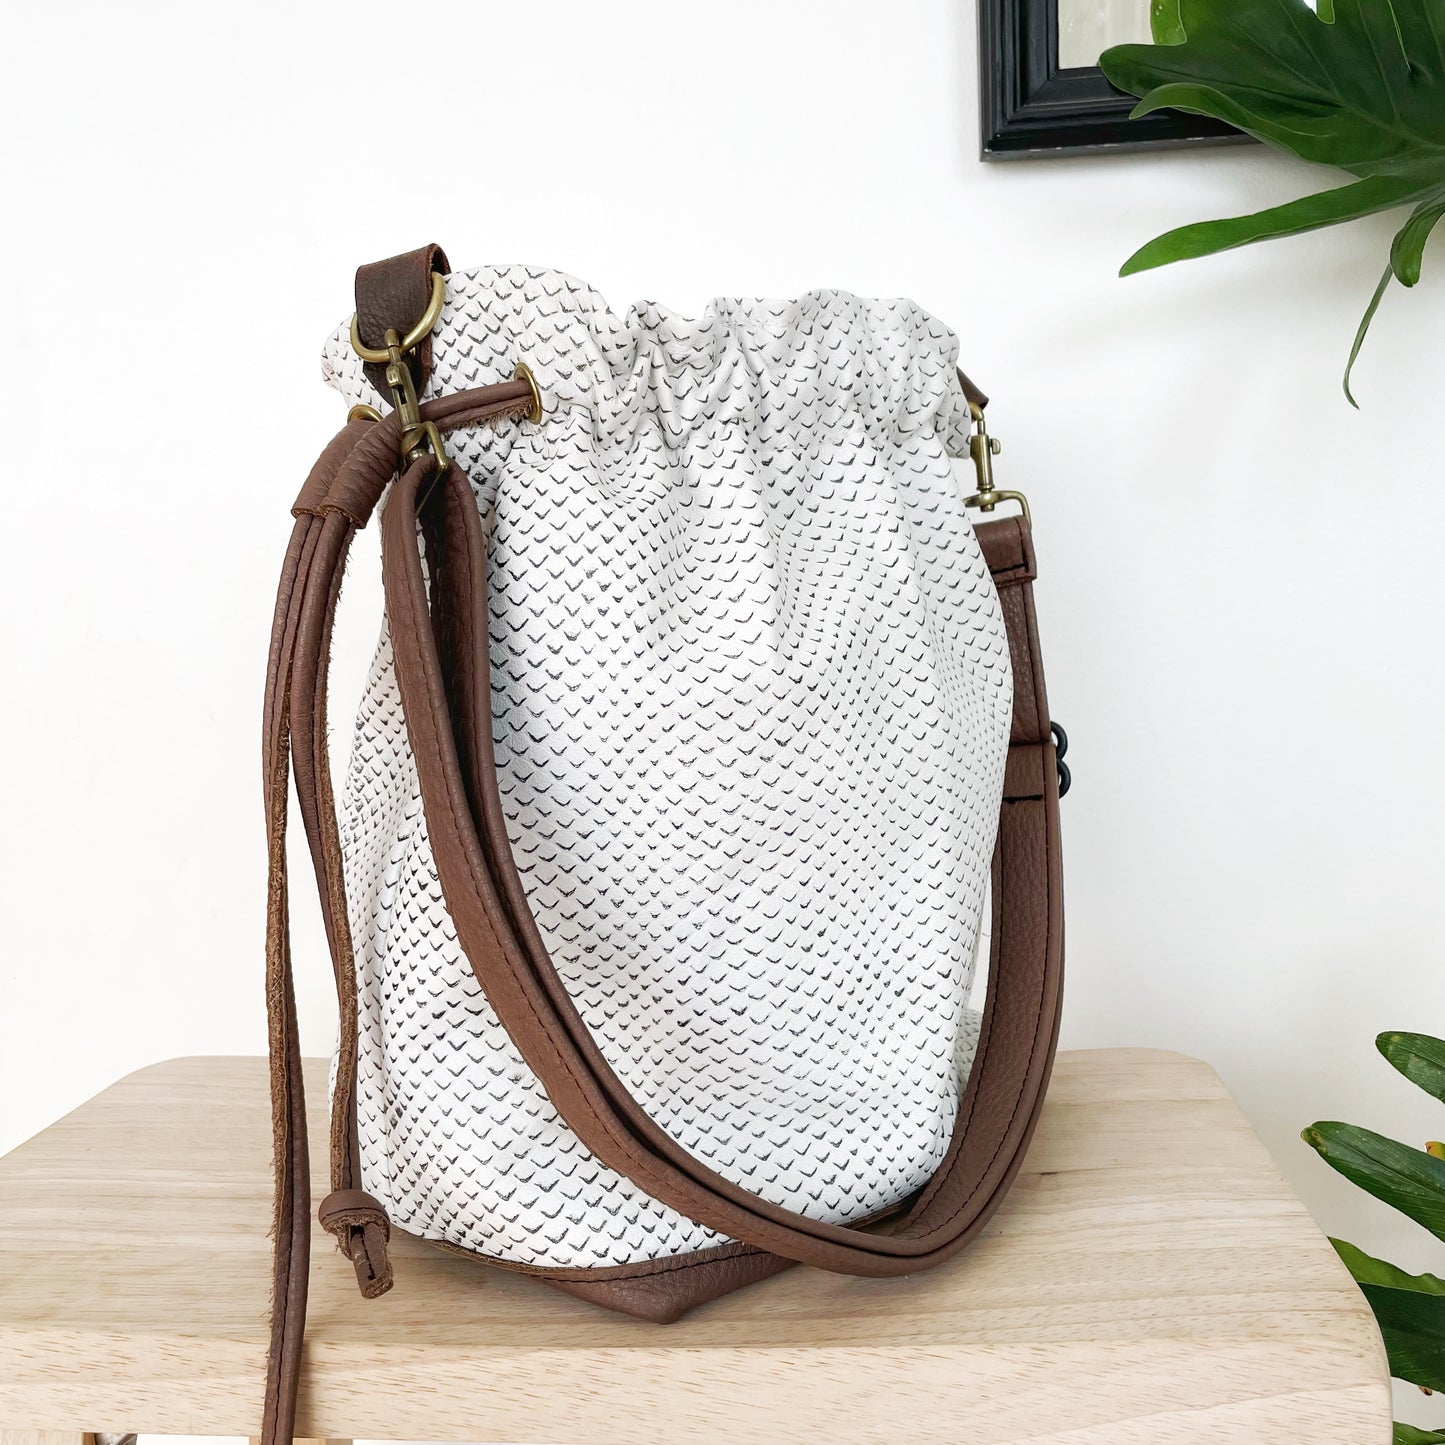 Leather Drawstring Tote Bag